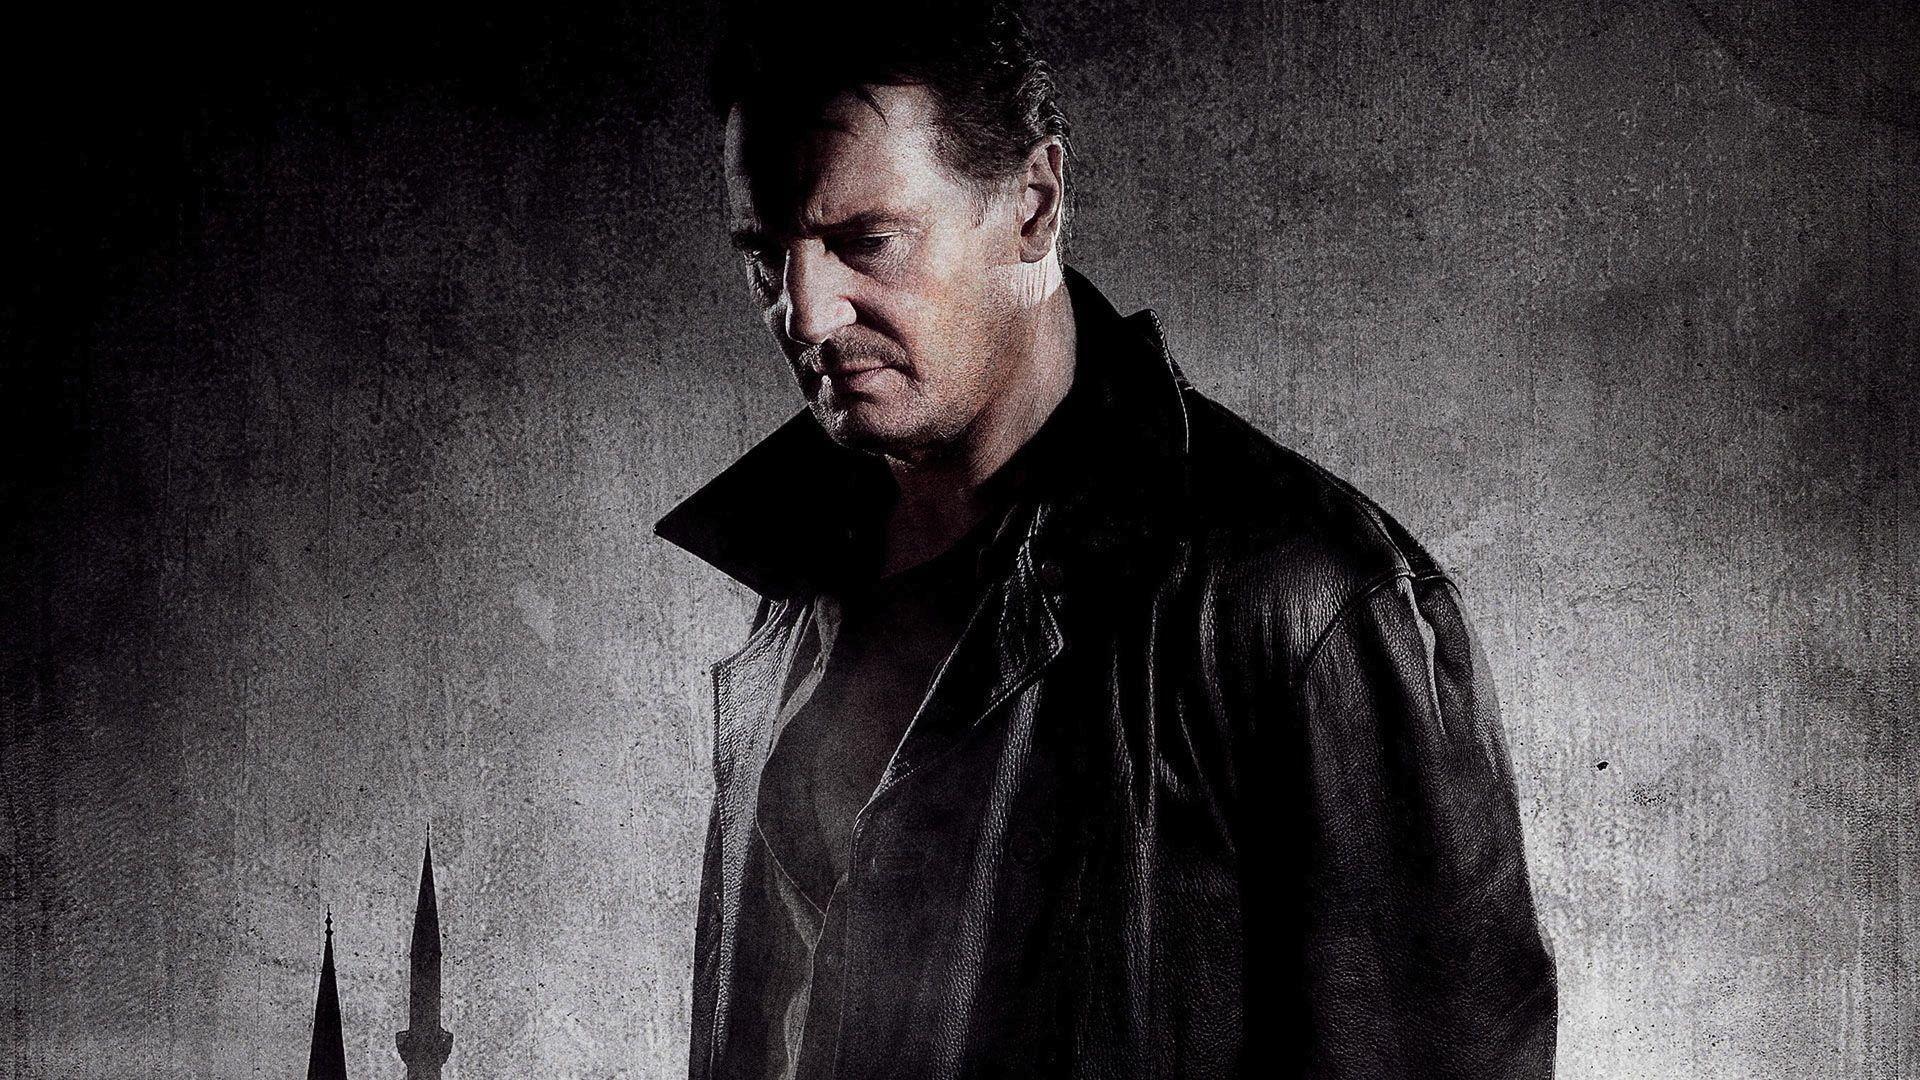 Liam Neeson Wallpaper Image Photo Picture Background